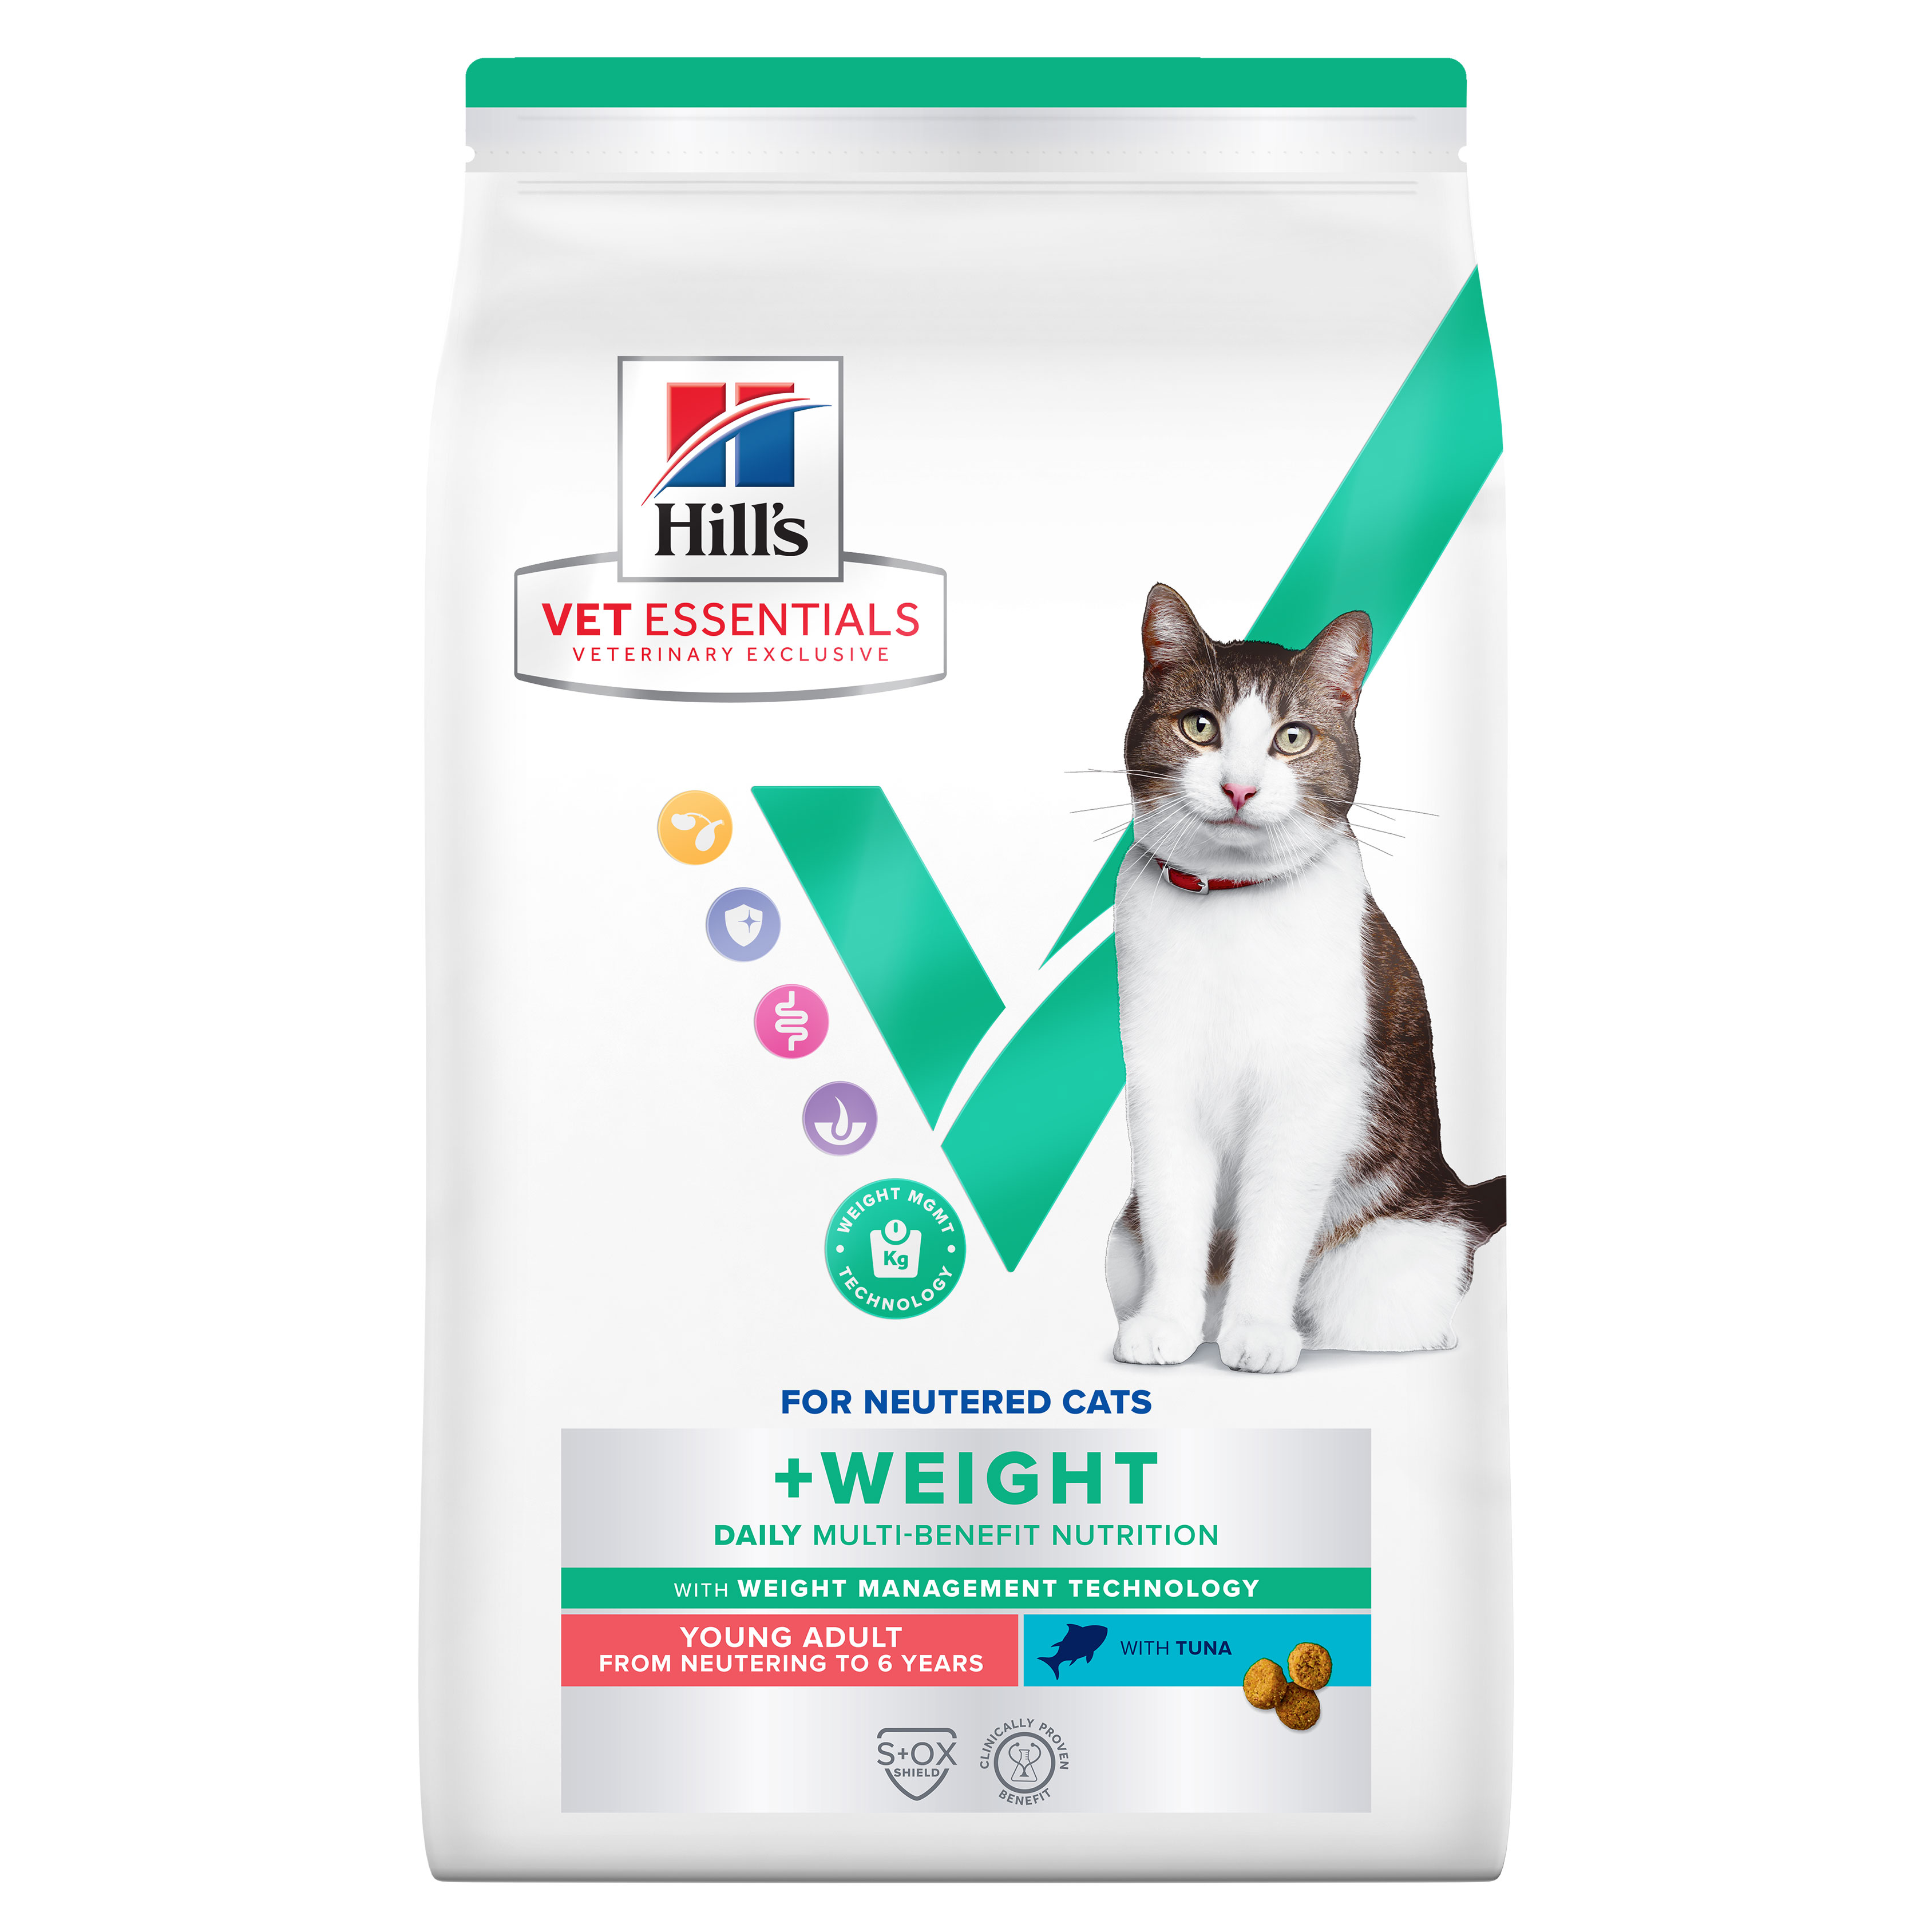 Hill's Vet Essentials מולטי בנפיט חתול בוגר צעיר, שמירה על המשקל, עם טונה, 3 ק"ג